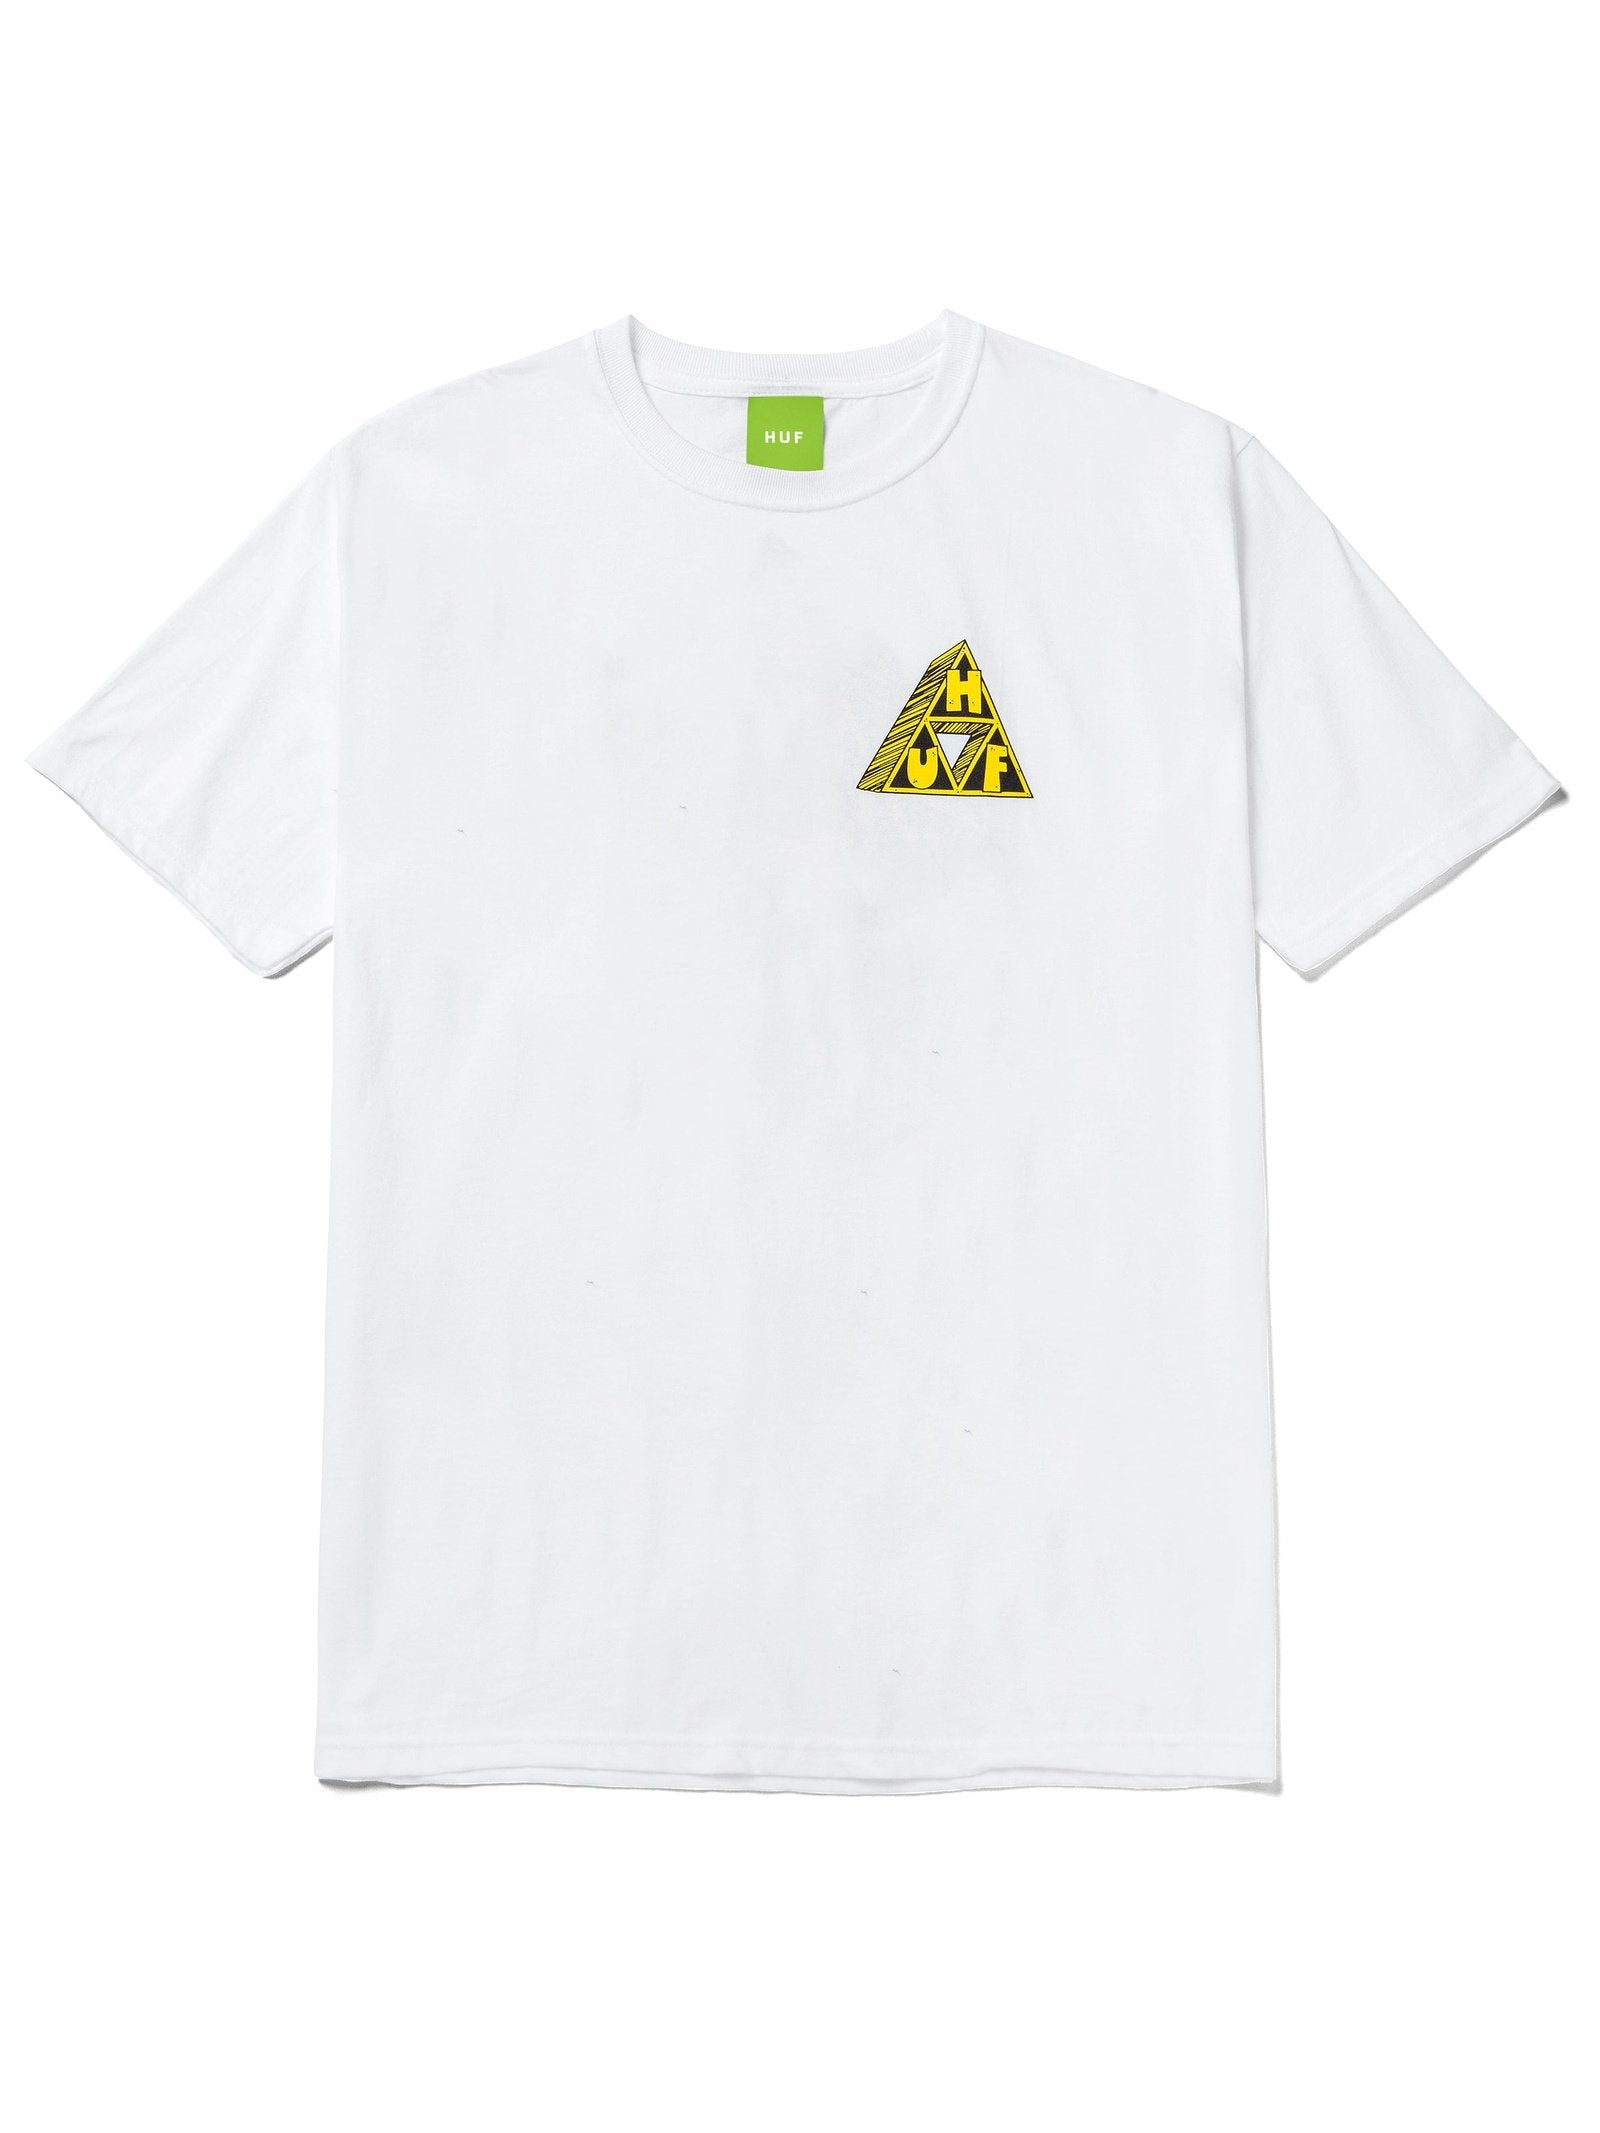 Huf Mens Saturday Morning Triple Triangle Short Sleeve T-Shirt White TS01756.